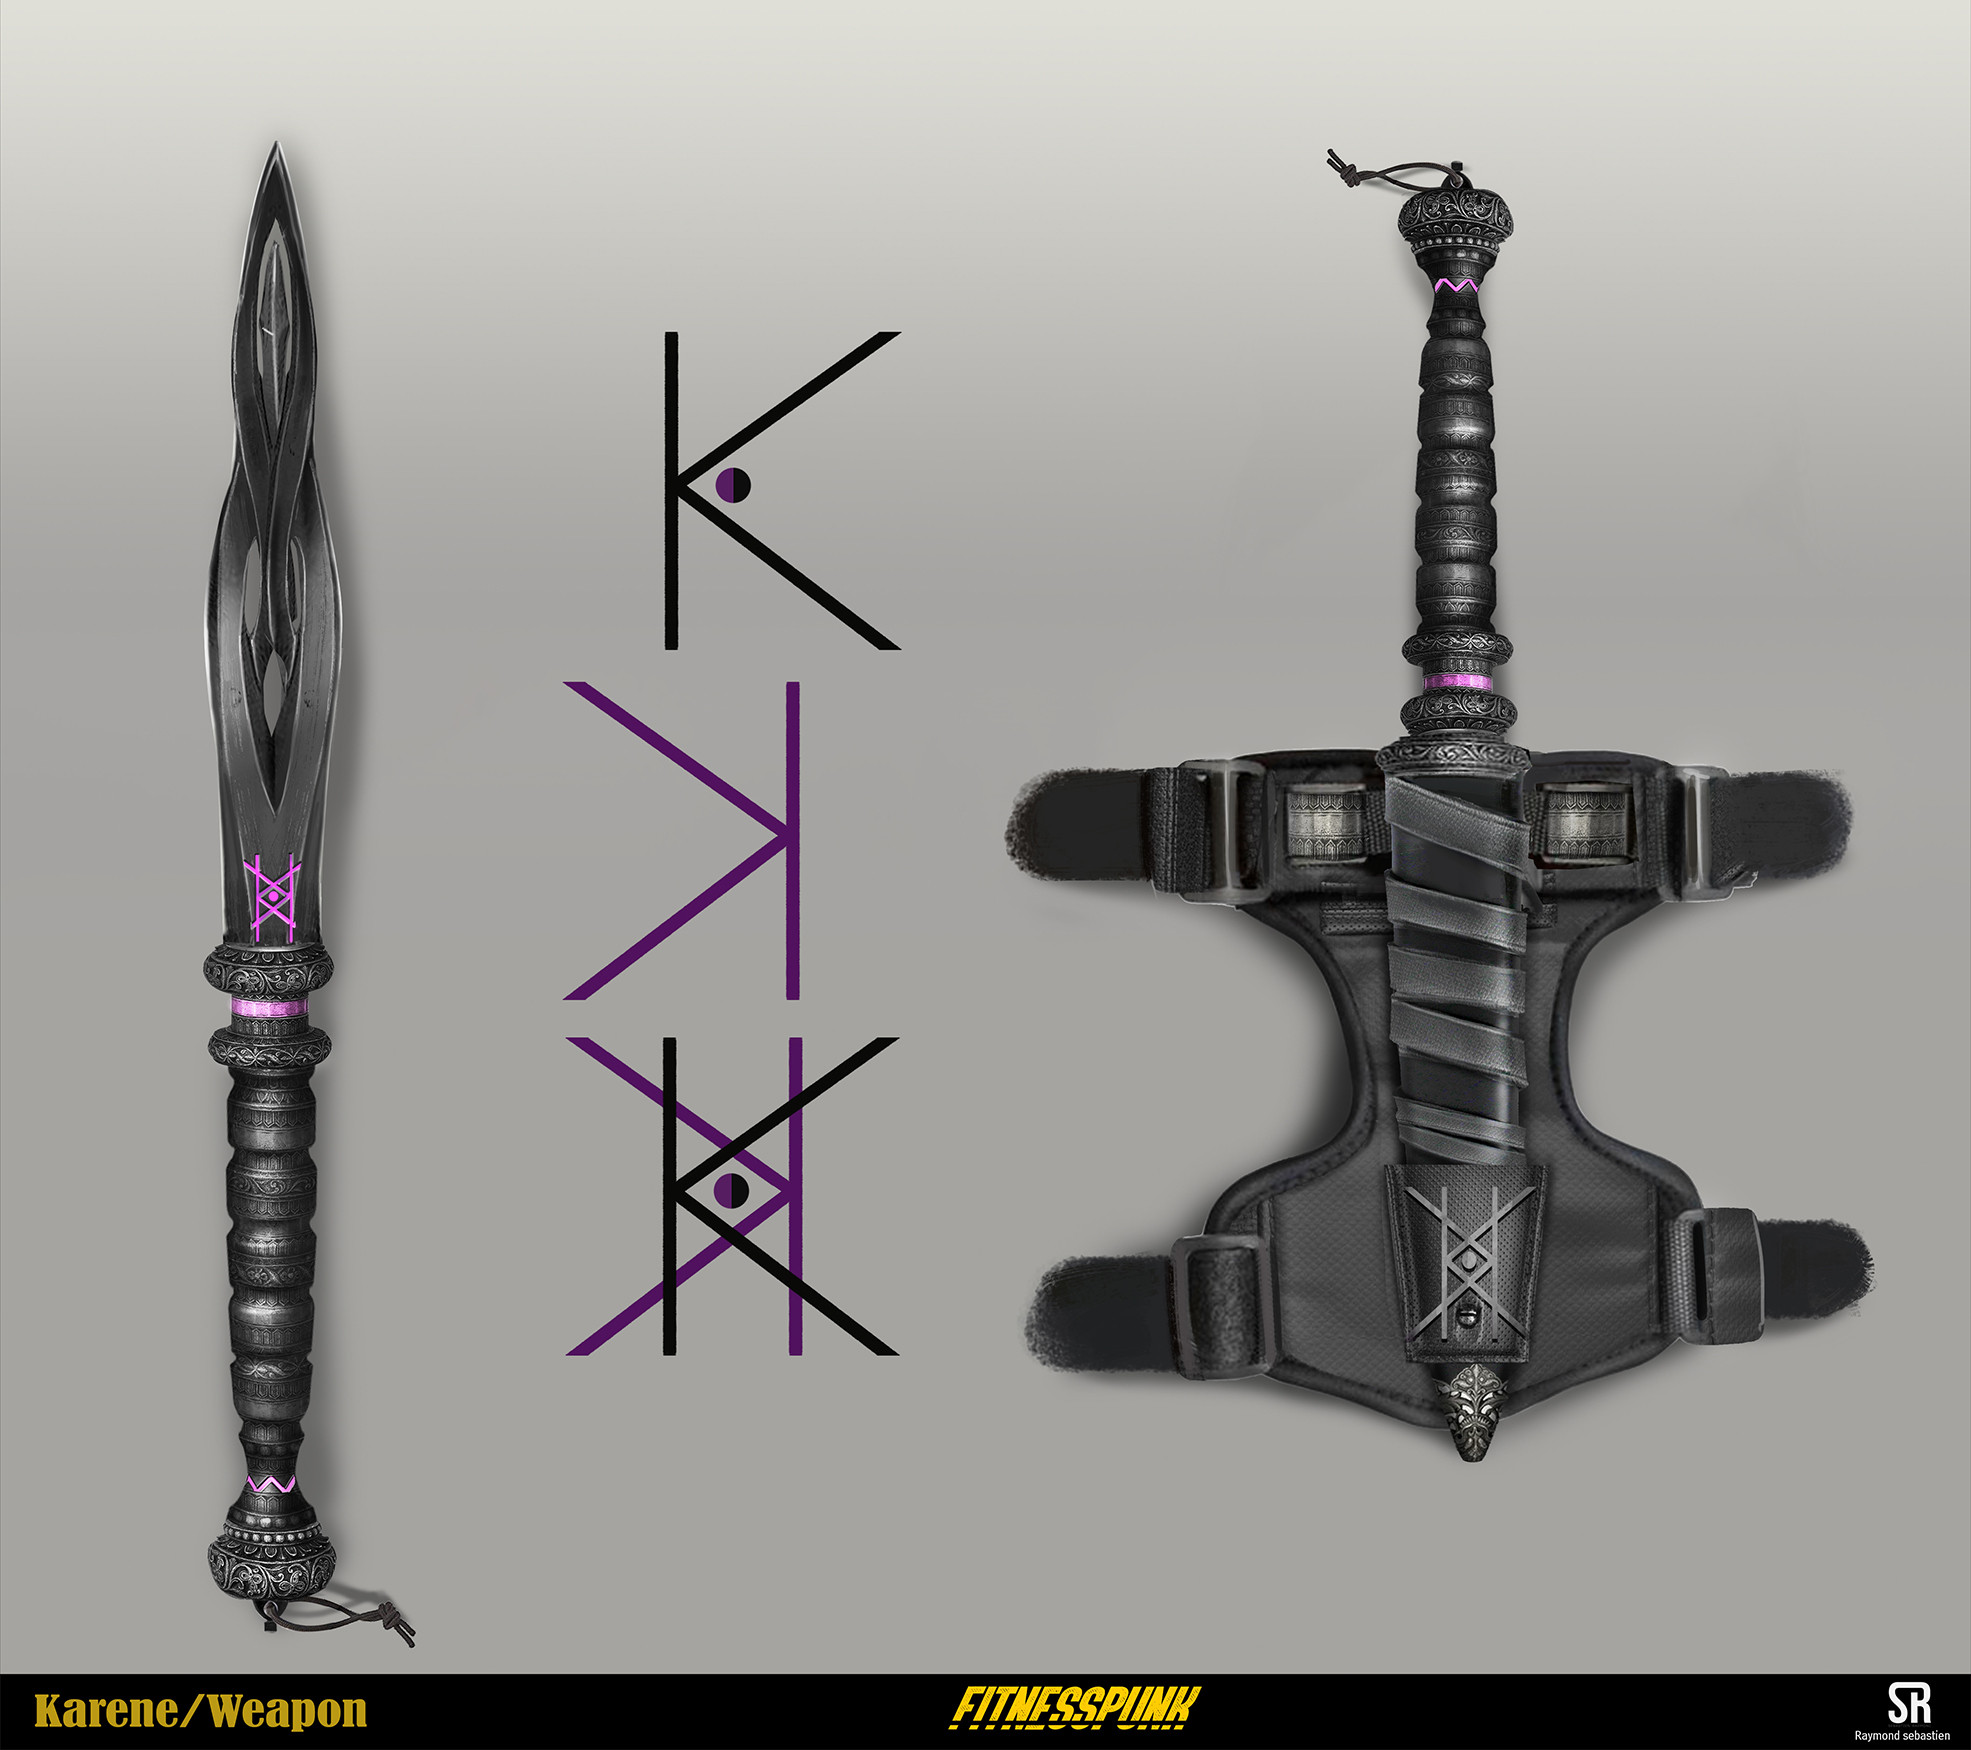 Weapon design : the dagger